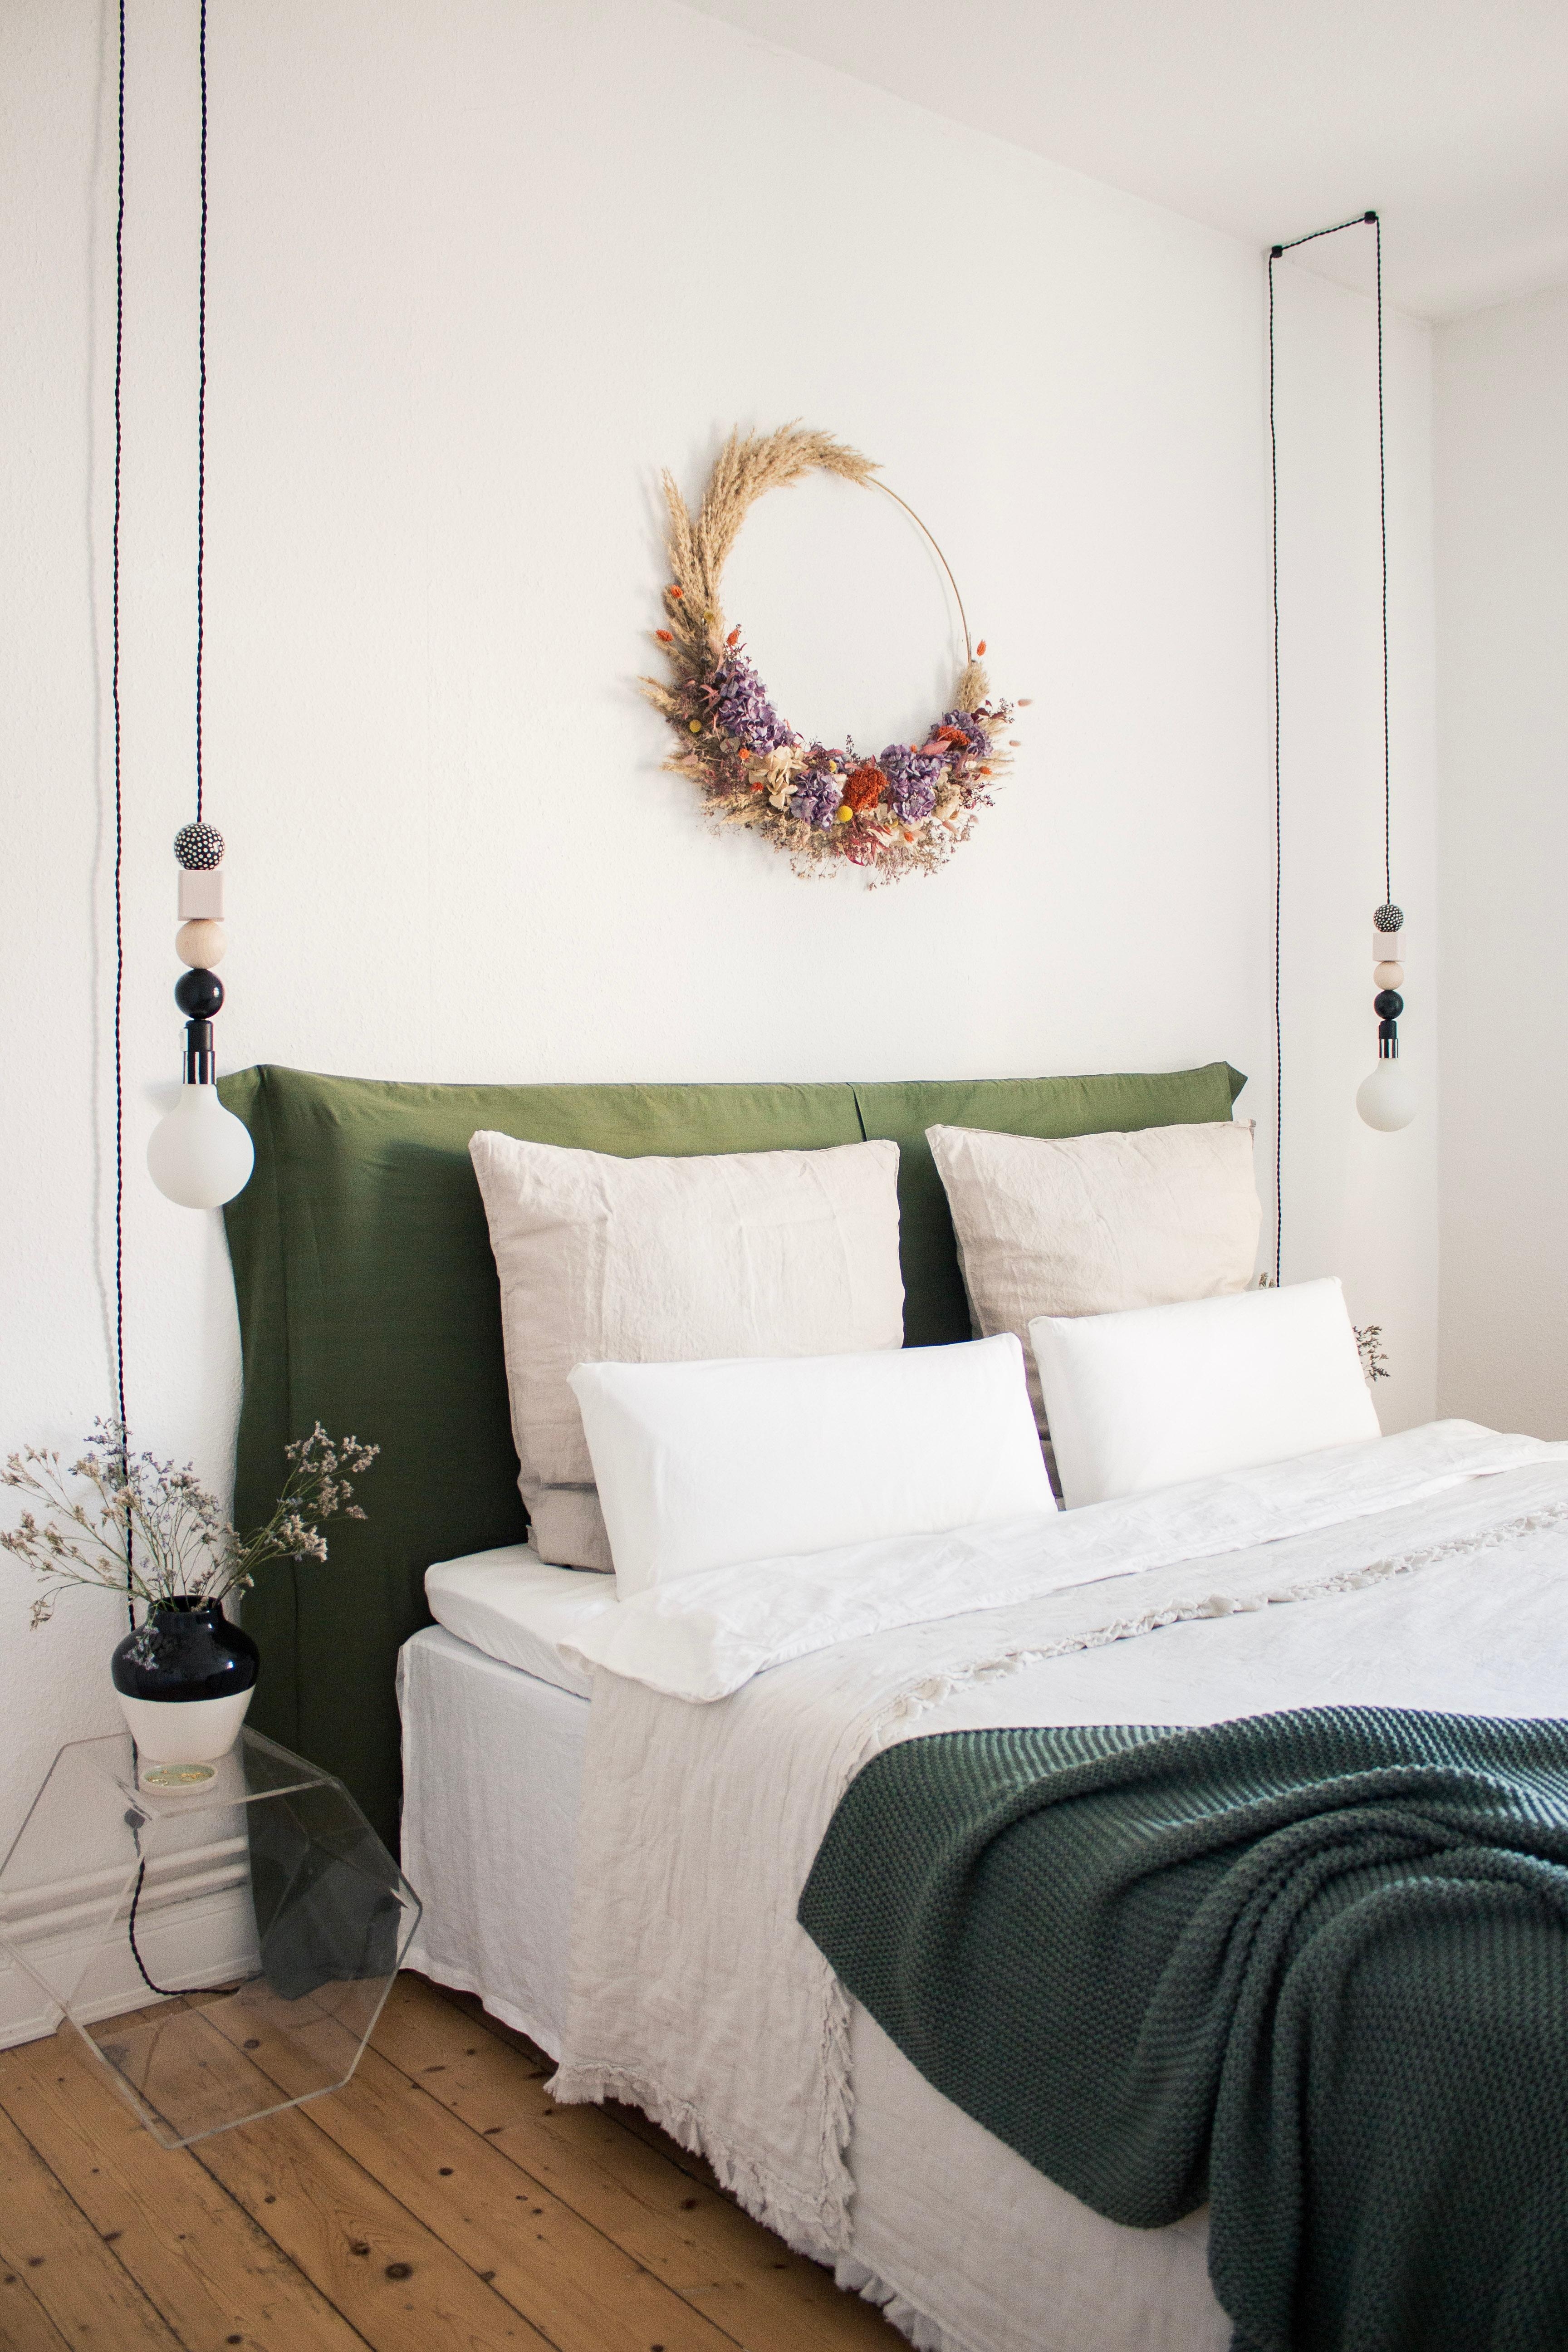 #bedroom #morningglory #schlafzimmer #diyheadboard #diylamp #greenbed #altbauliebe #altbauwohnung #flowerwreath